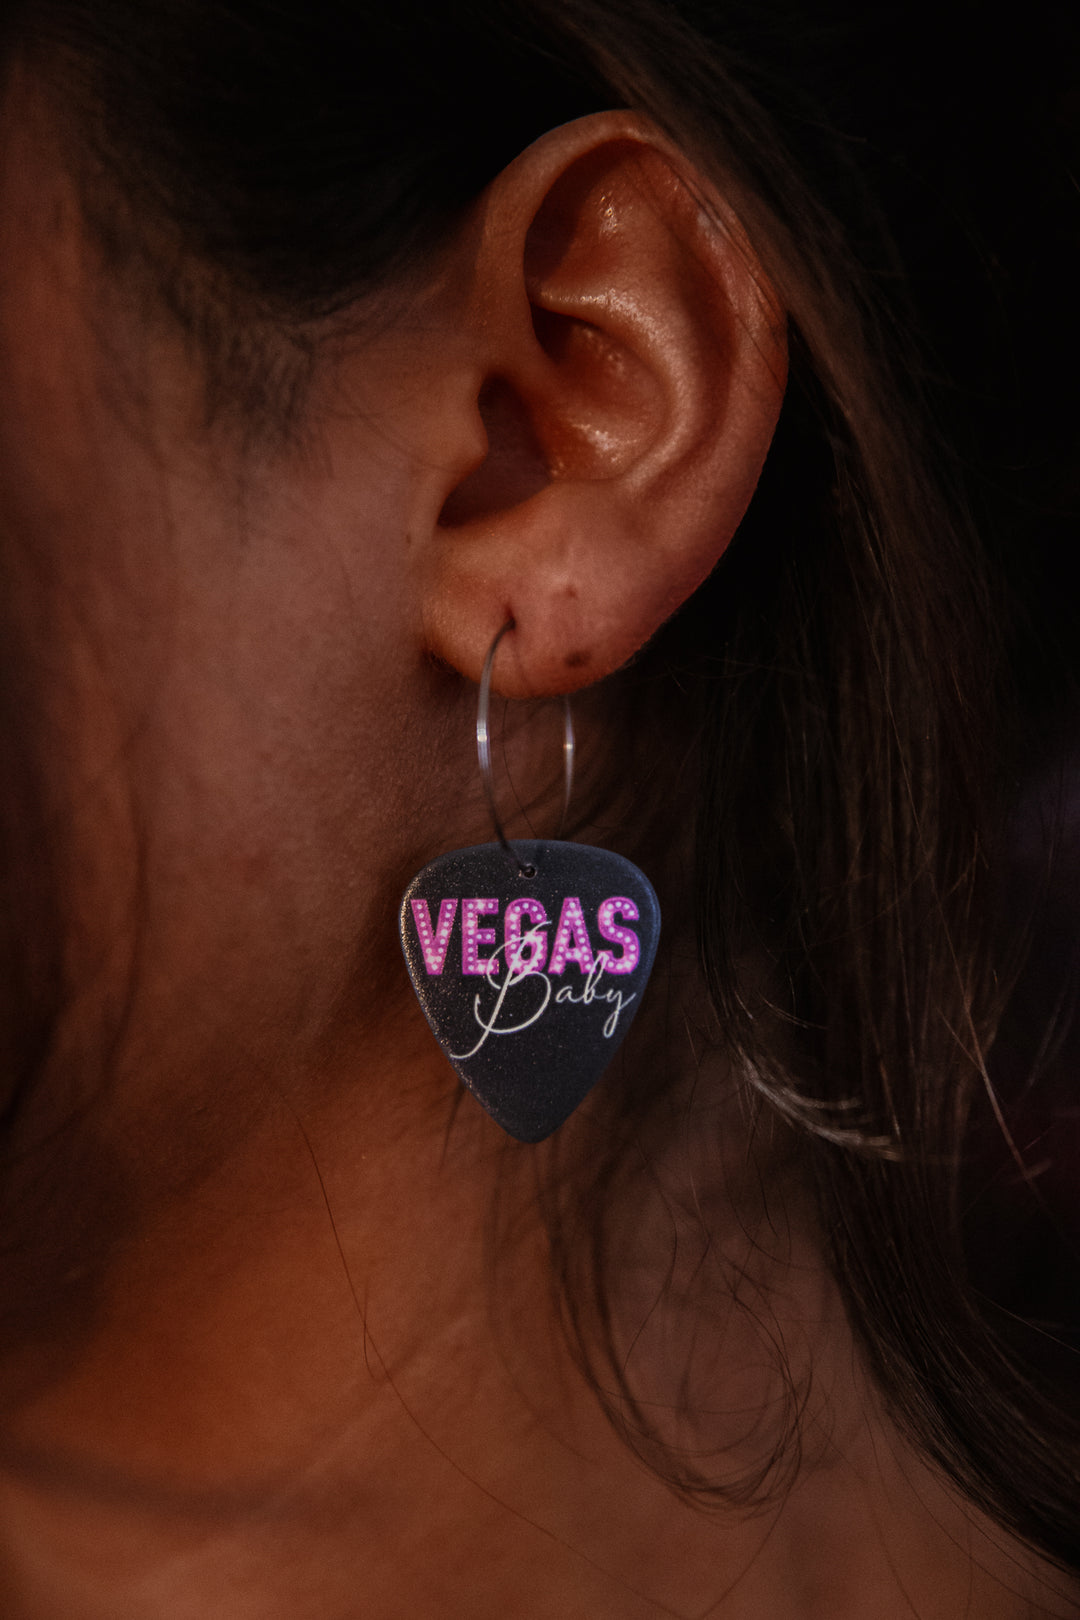 Las Vegas Baby Black Reversible Single Guitar Pick Earrings